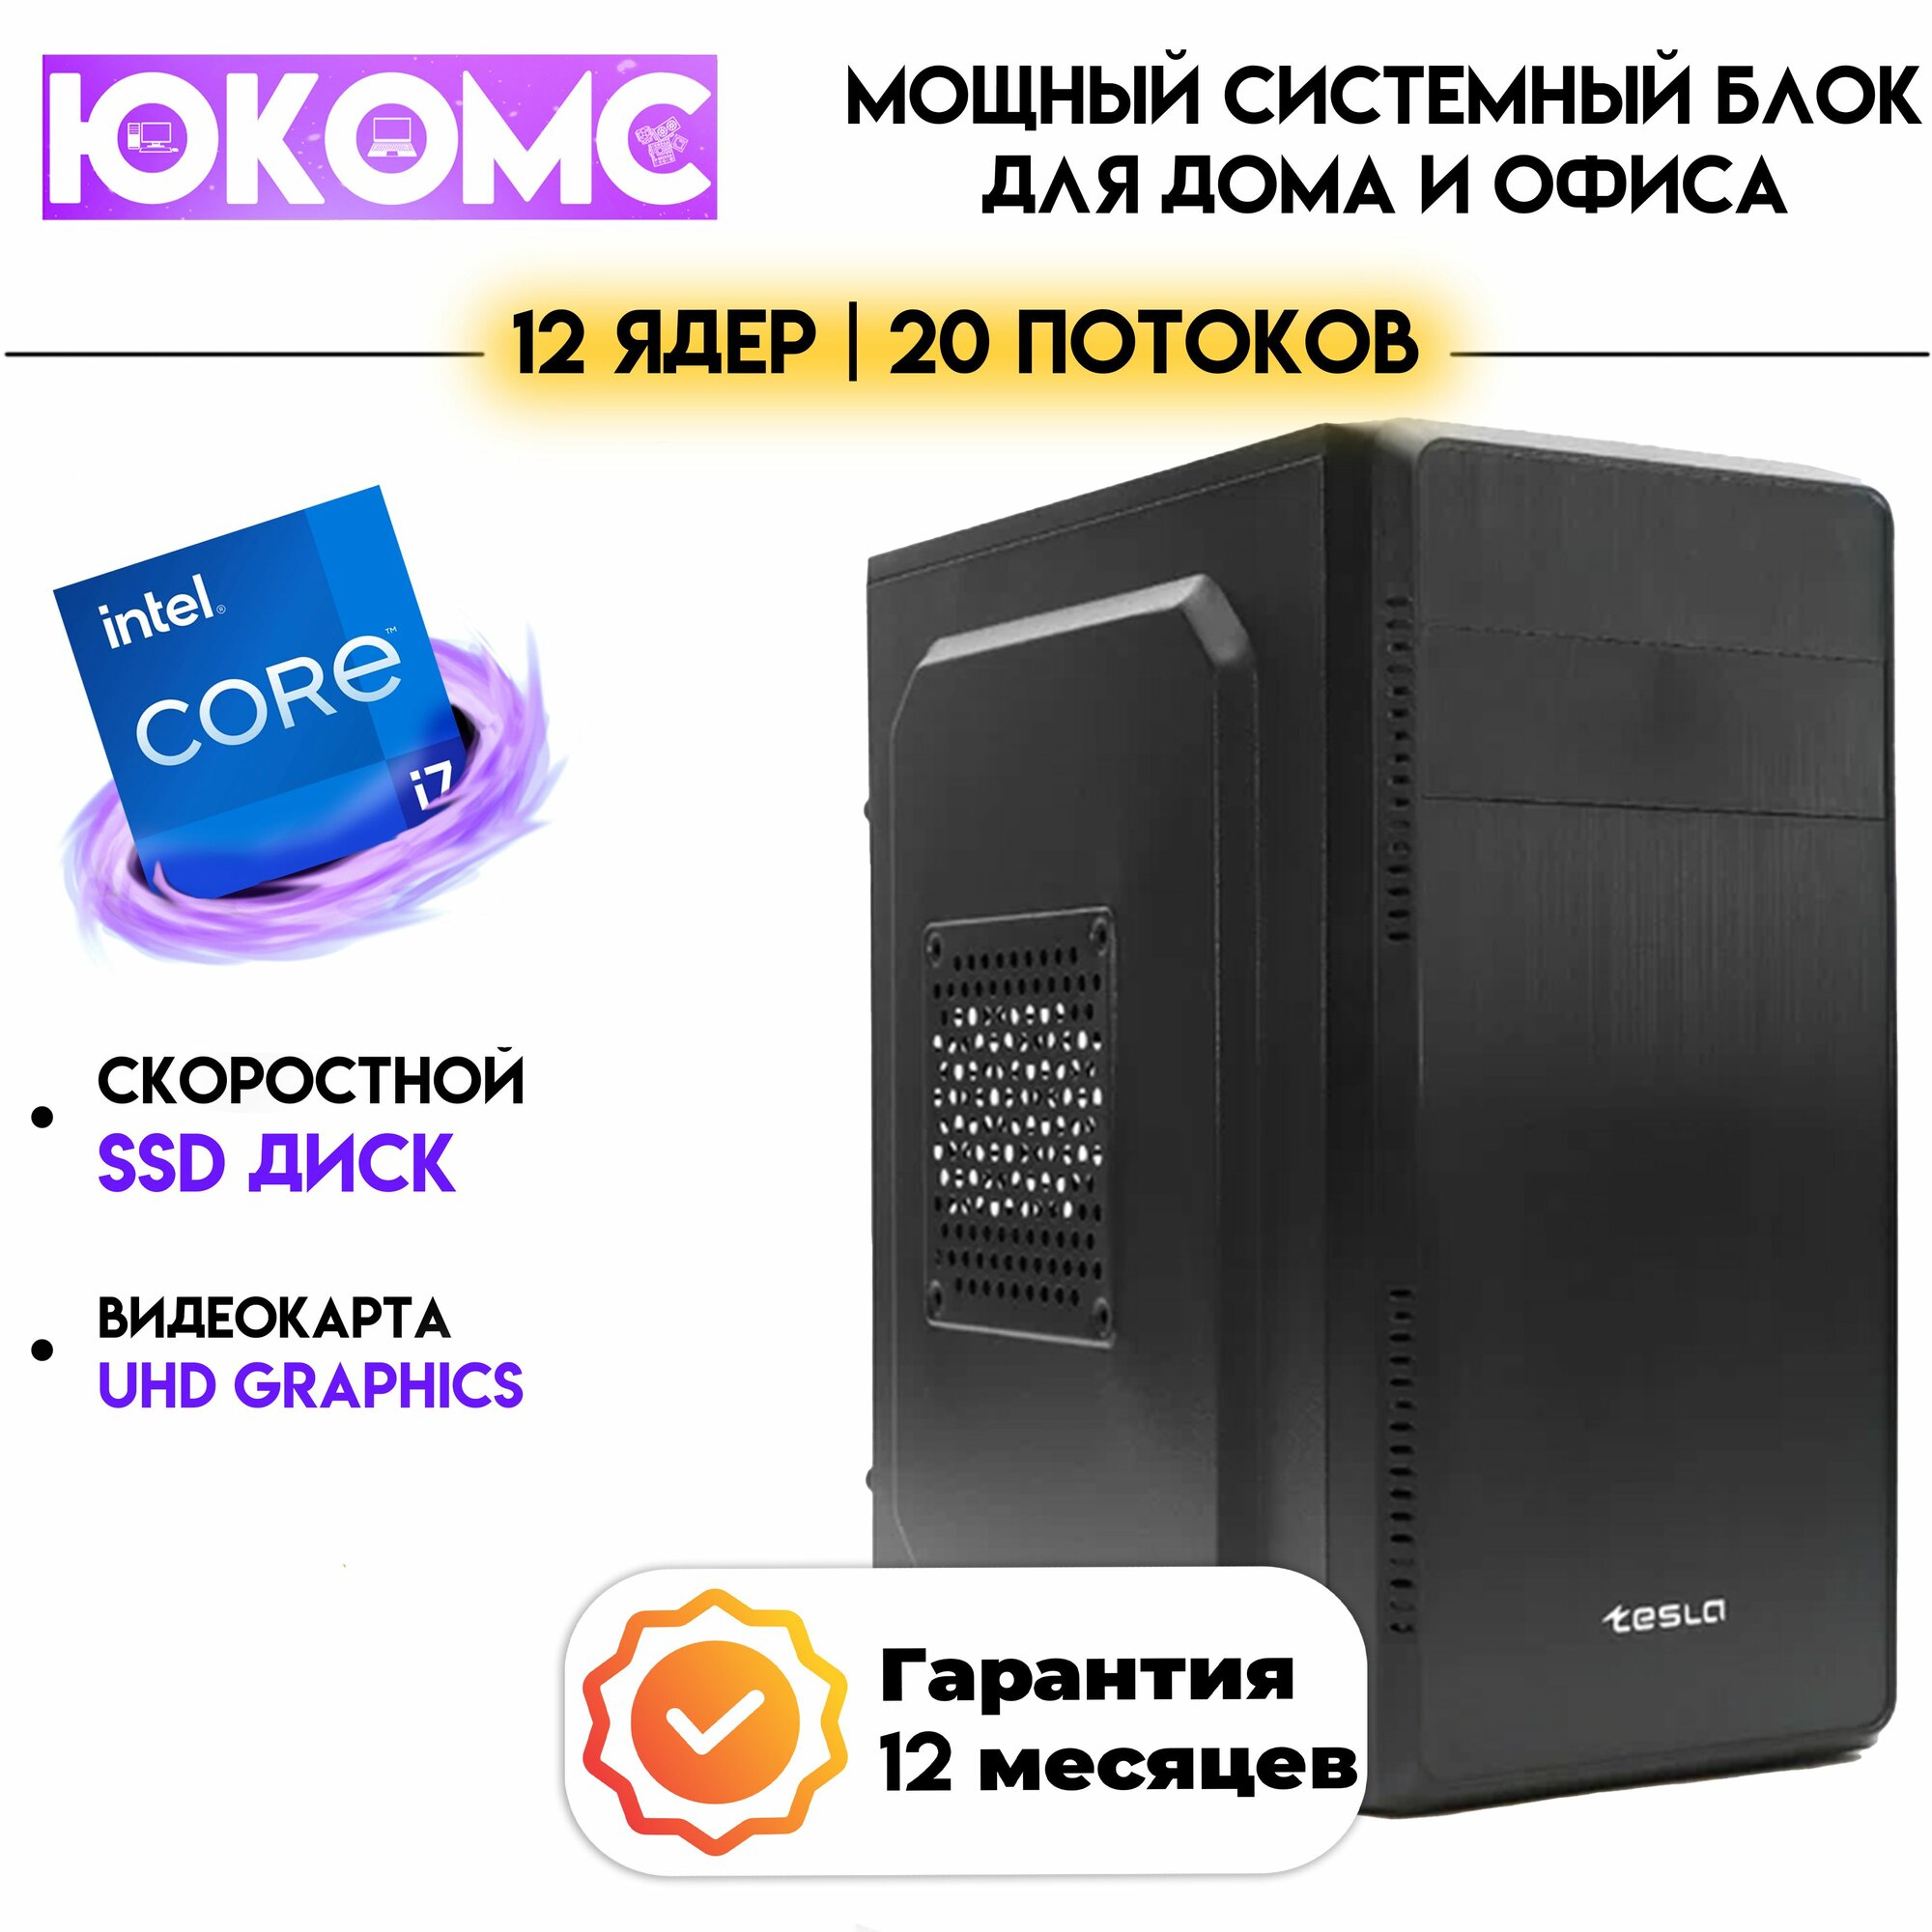 PC юкомс Core i7 12700, SSD 2TB, 8GB DDR4, БП 350W, win 10 pro, Classic black